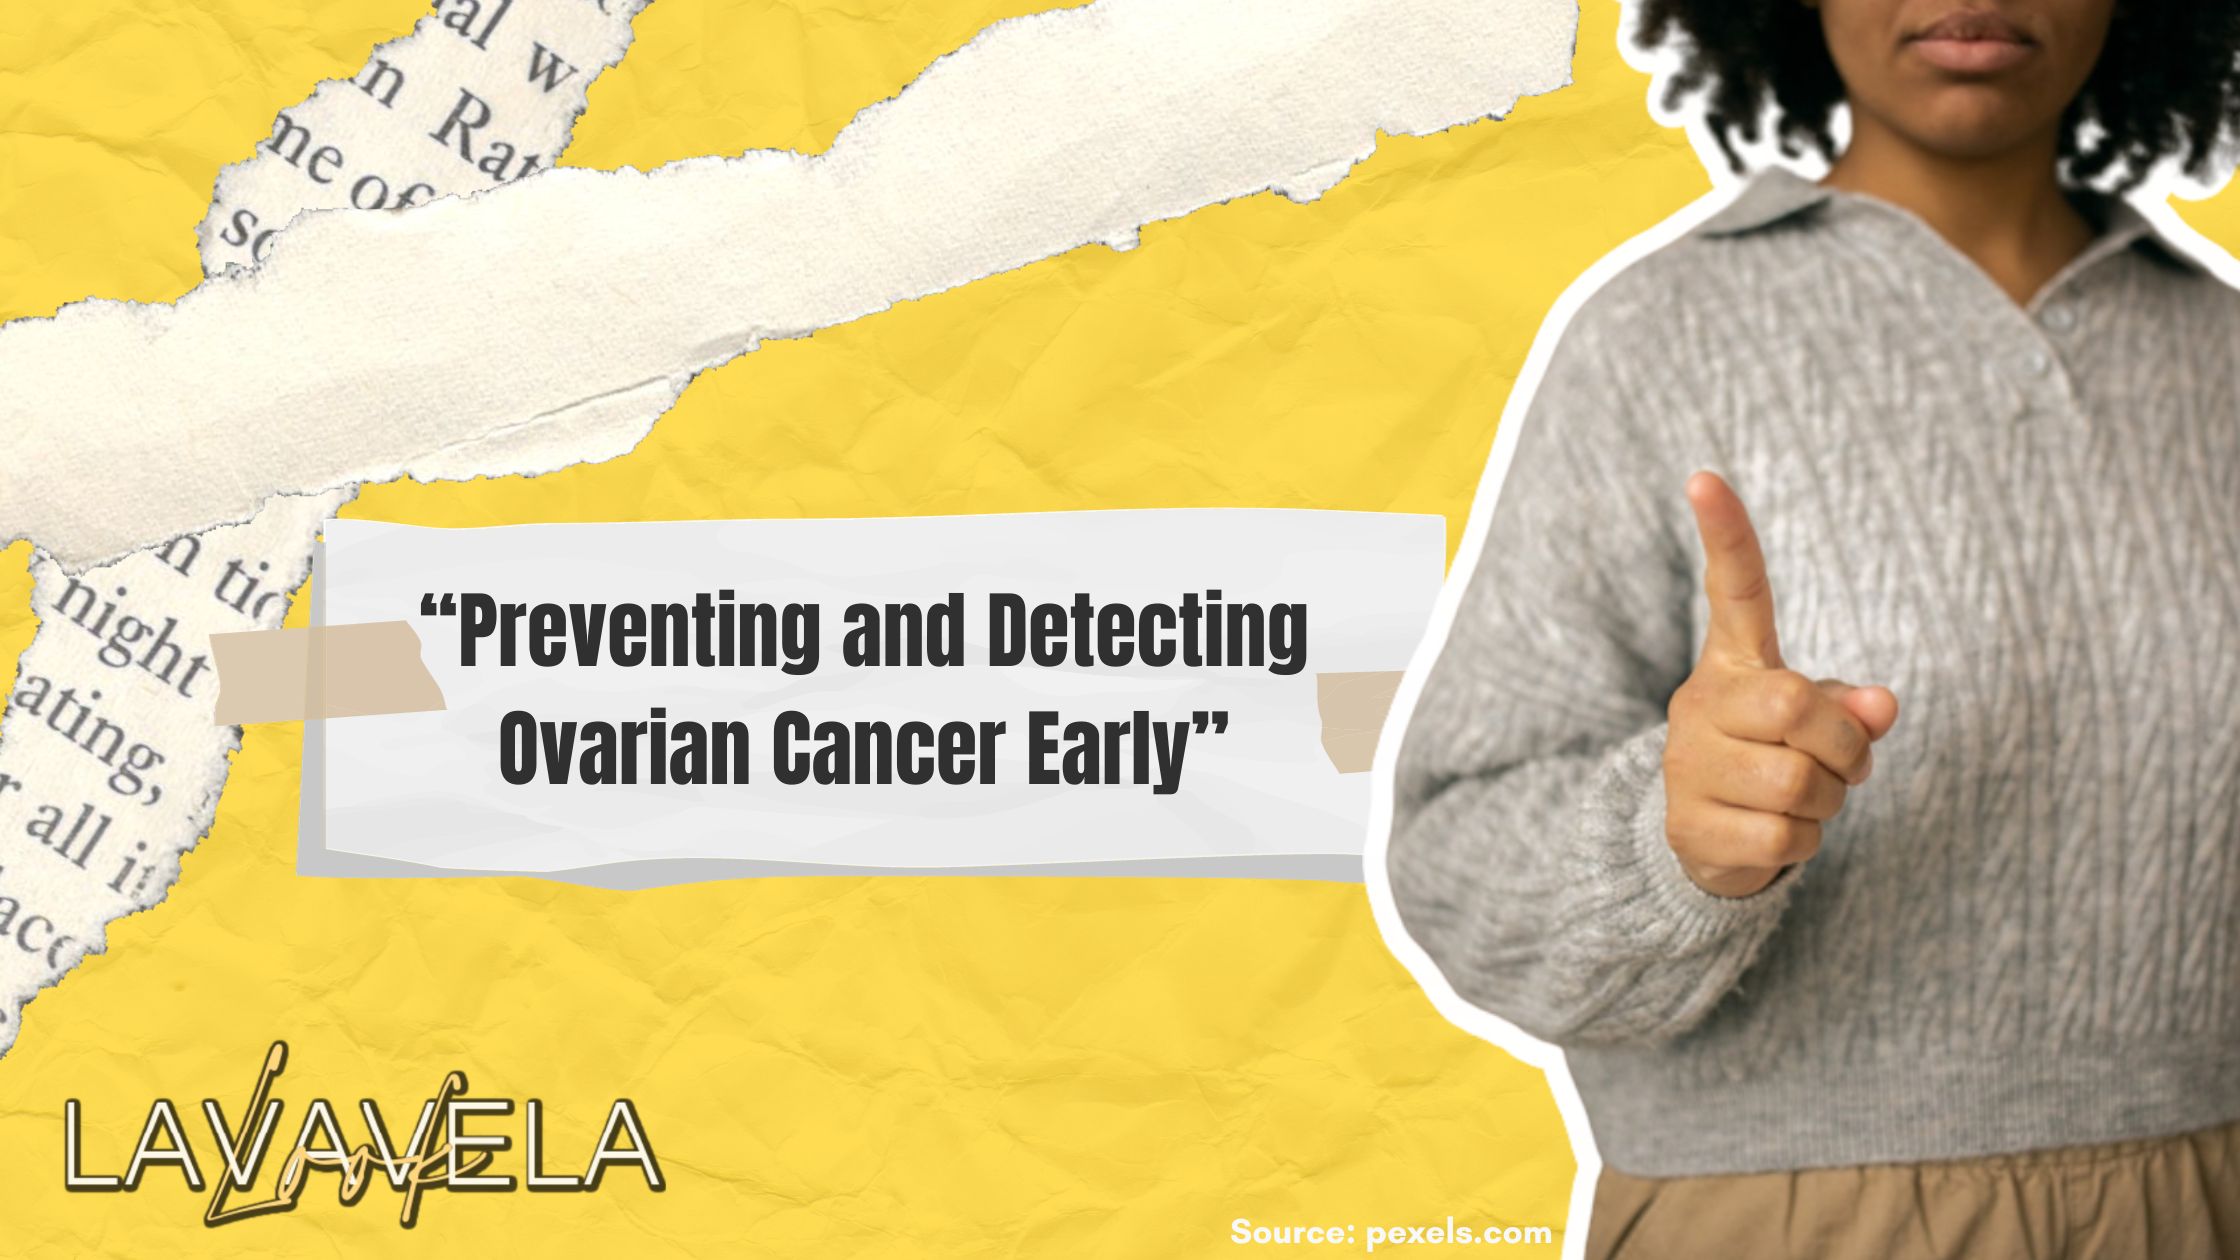 Ovarian Cancer, Cancer Awareness, Women's Health, Cancer Risk Factors, Women's Health Care